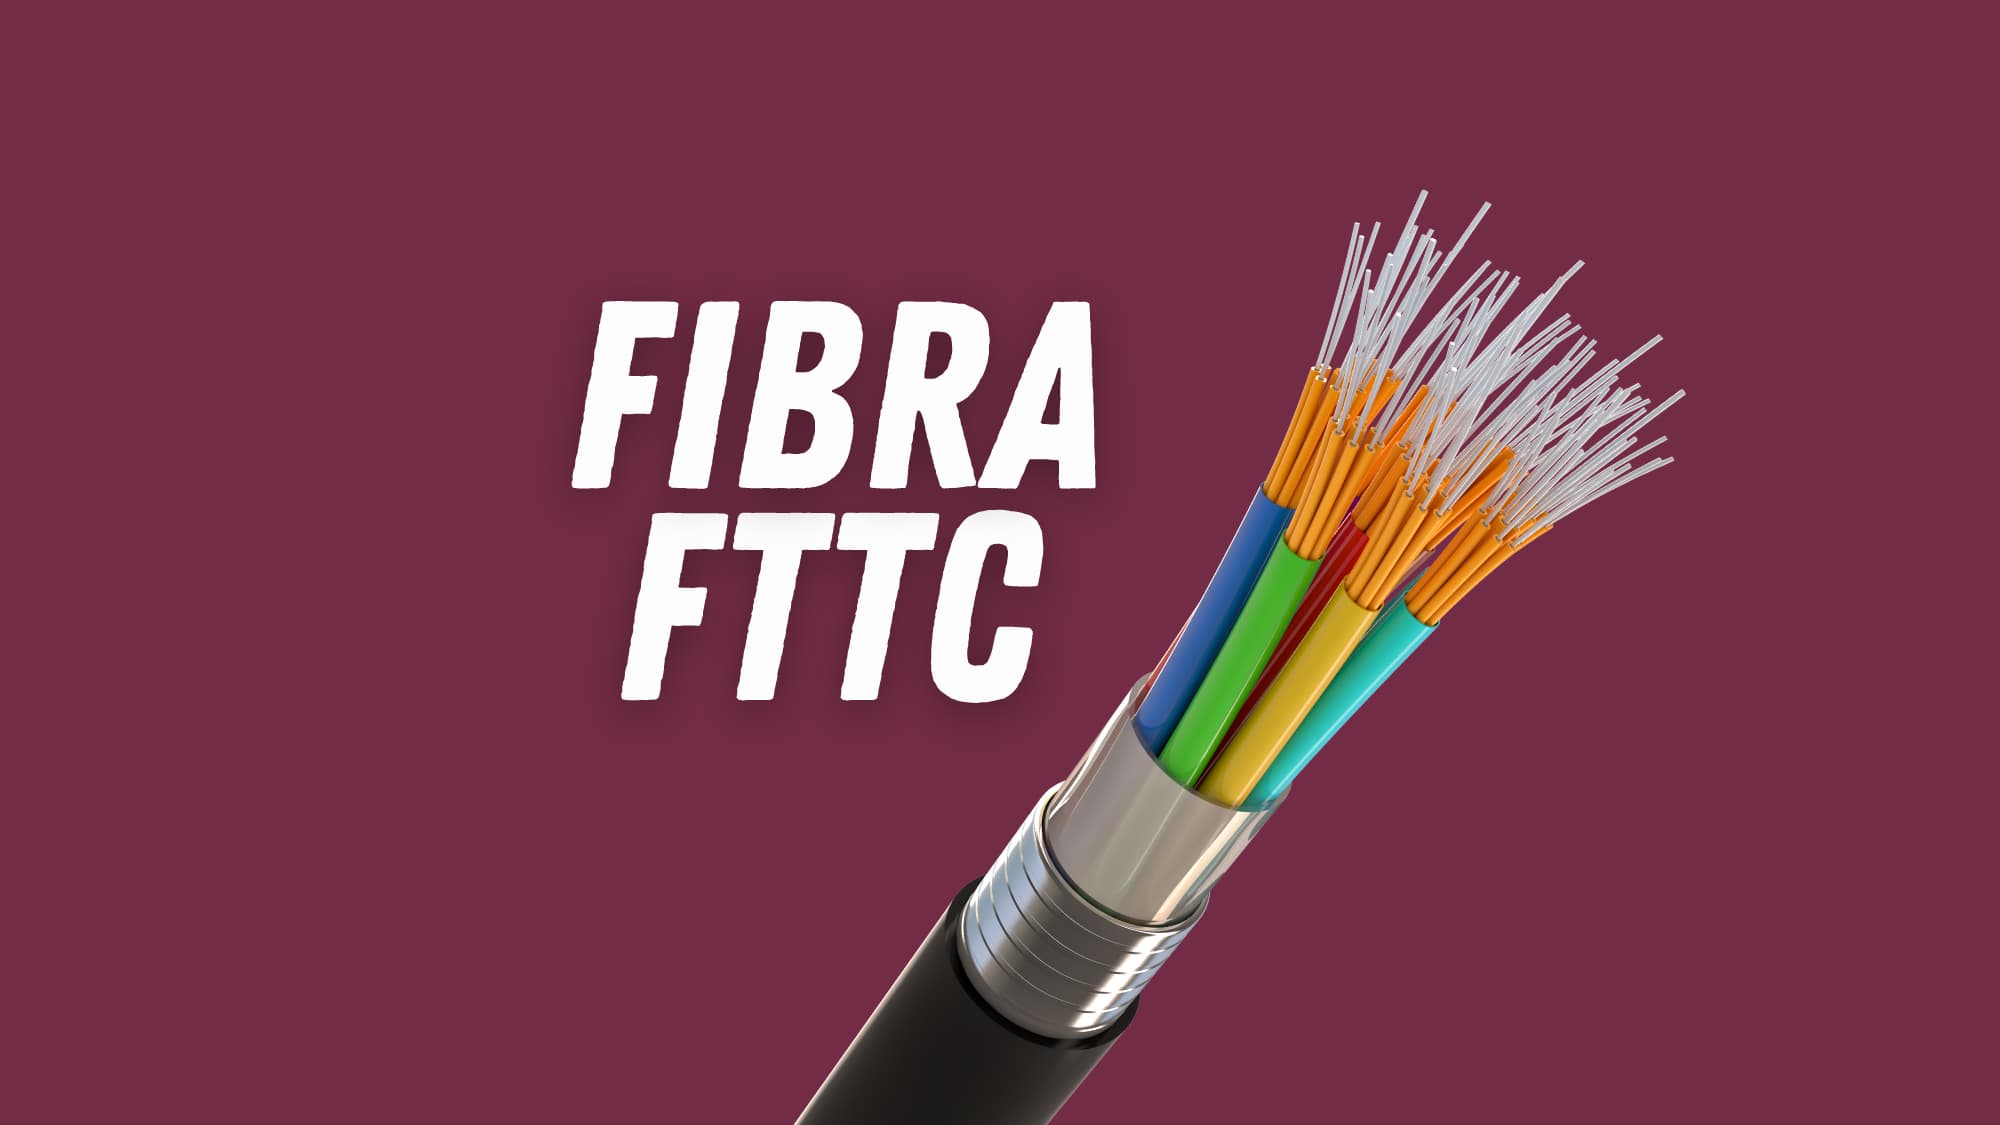 Fibra FTTC